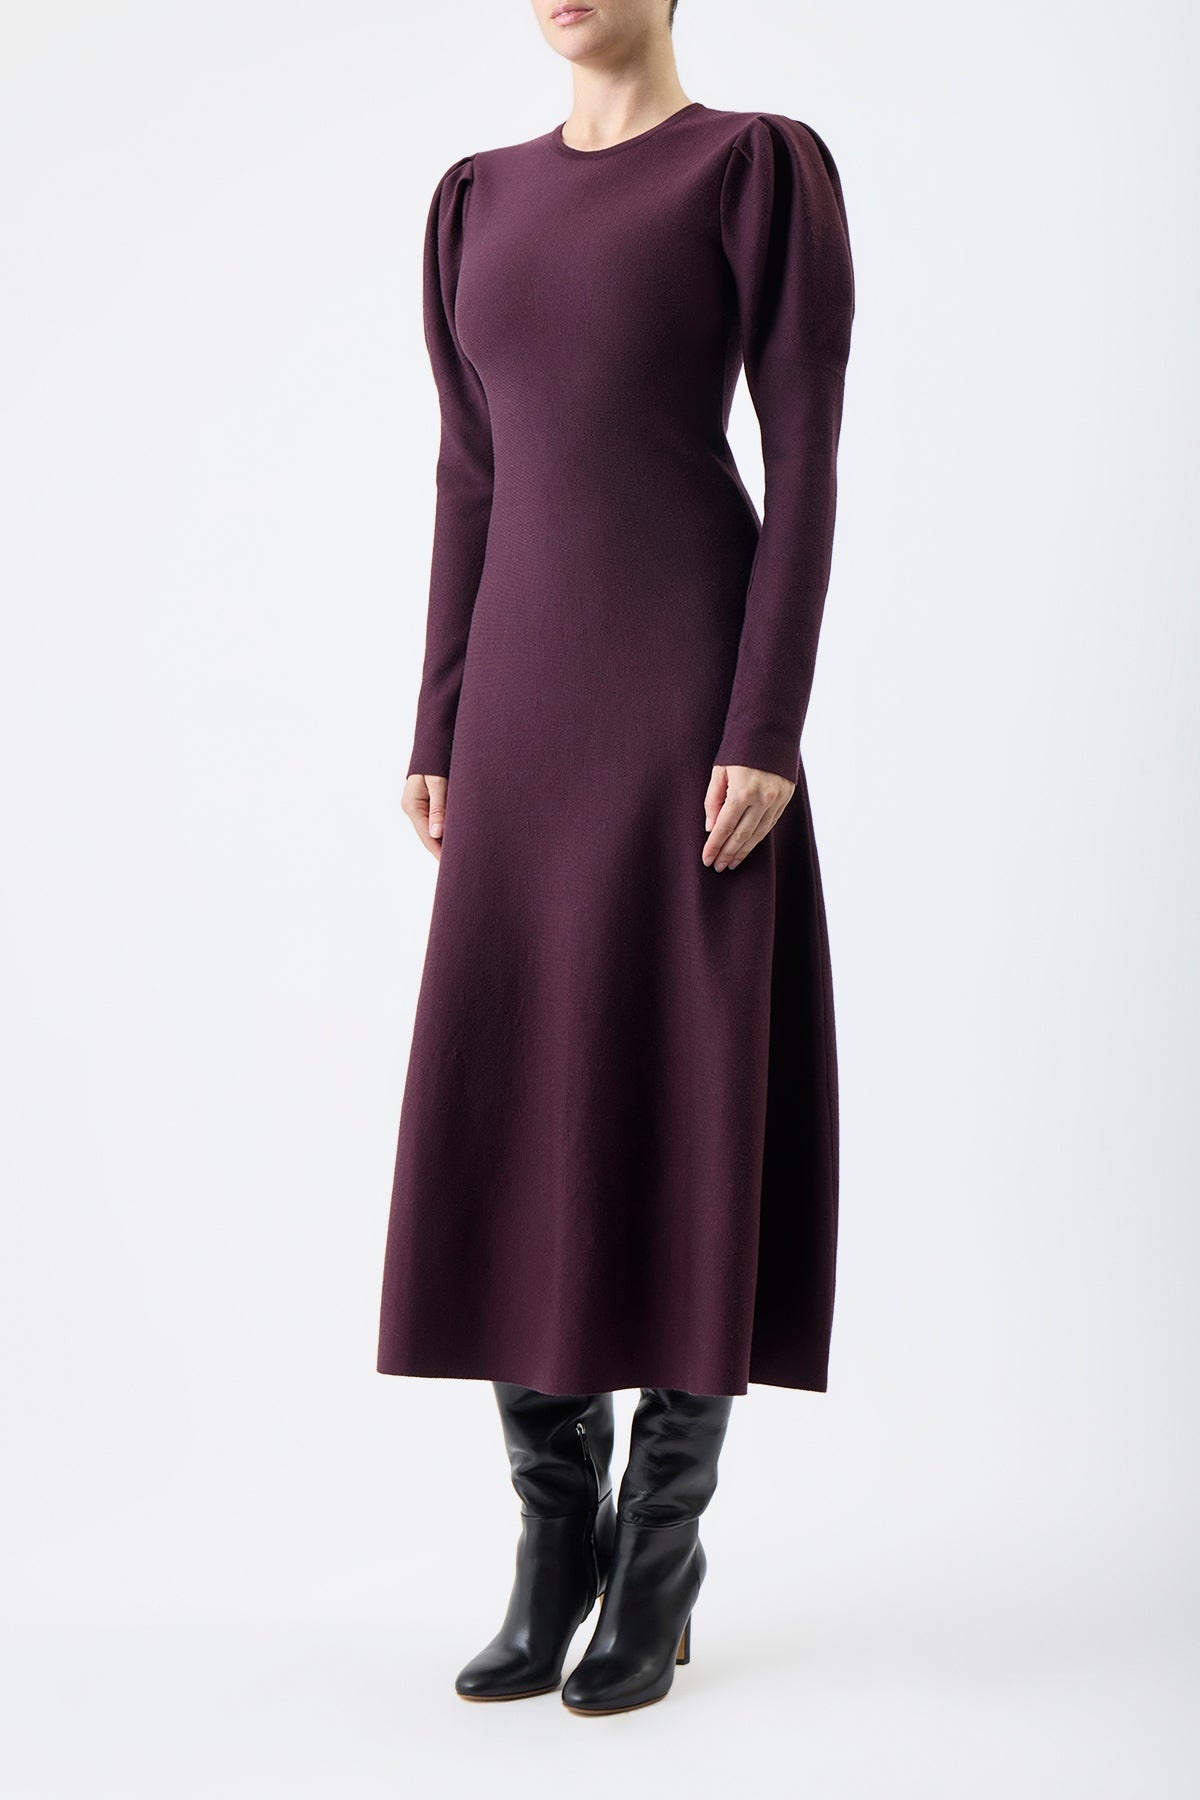 Hannah Dress in Deep Bordeaux Cashmere Wool - 3